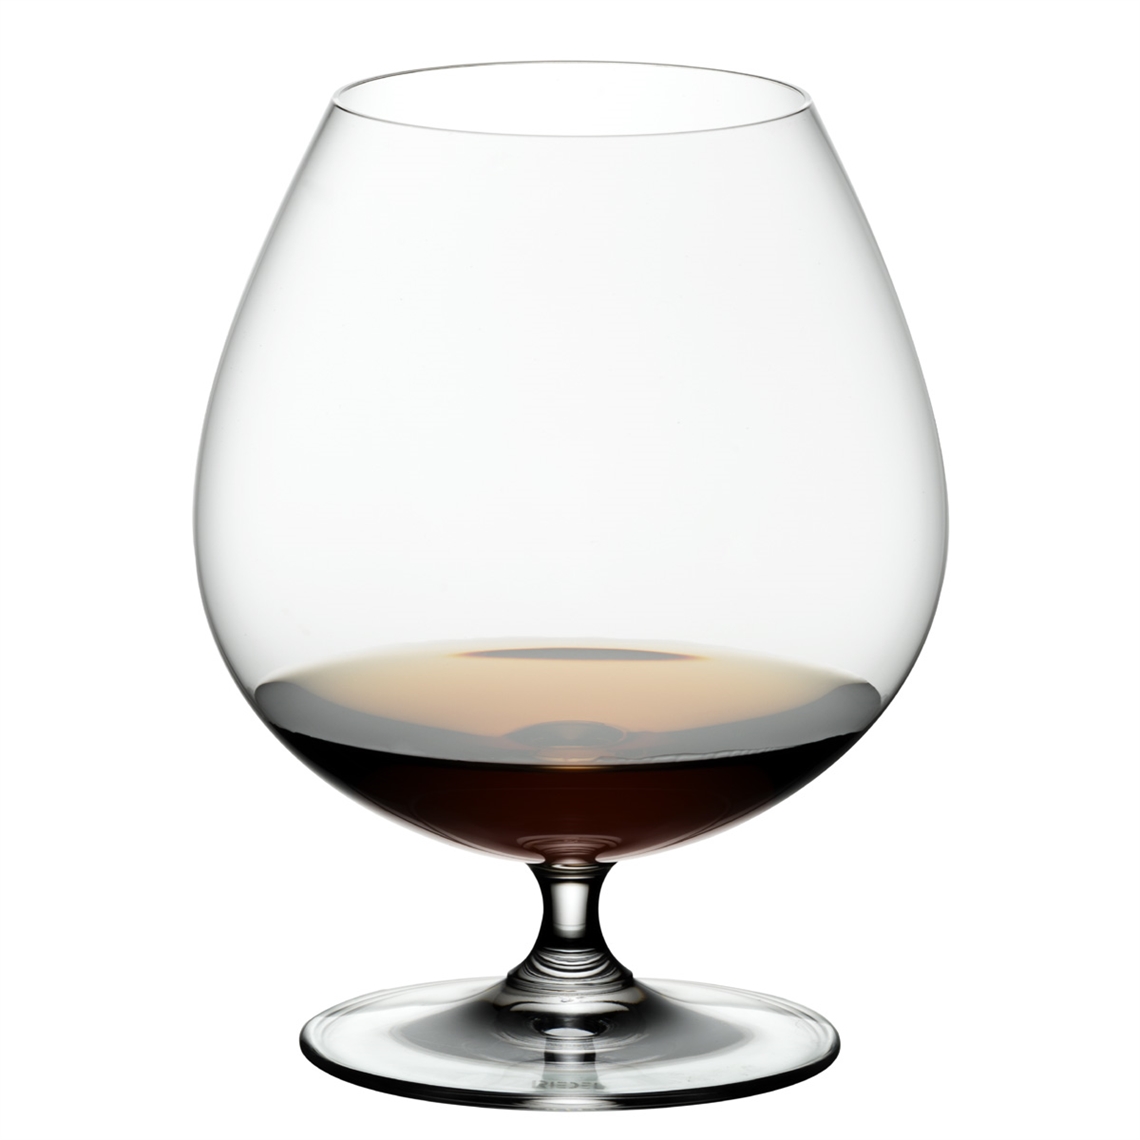 View more cabernet sauvignon wine glasses from our Spirit Glasses range